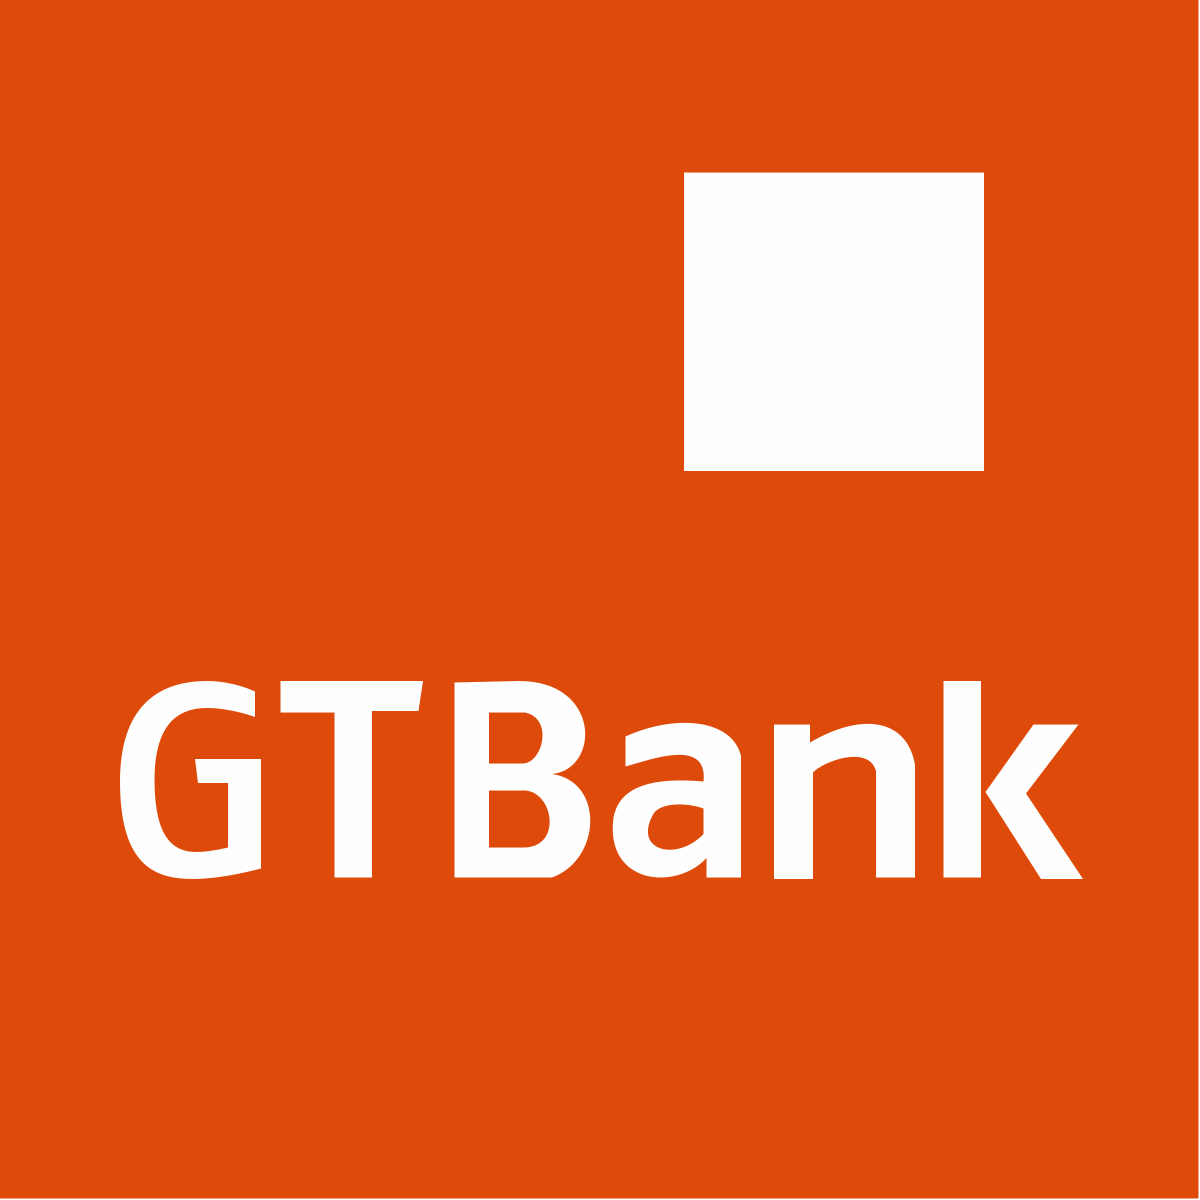  How to Upgrade Your GTBank Account Easily (Online & Offline)